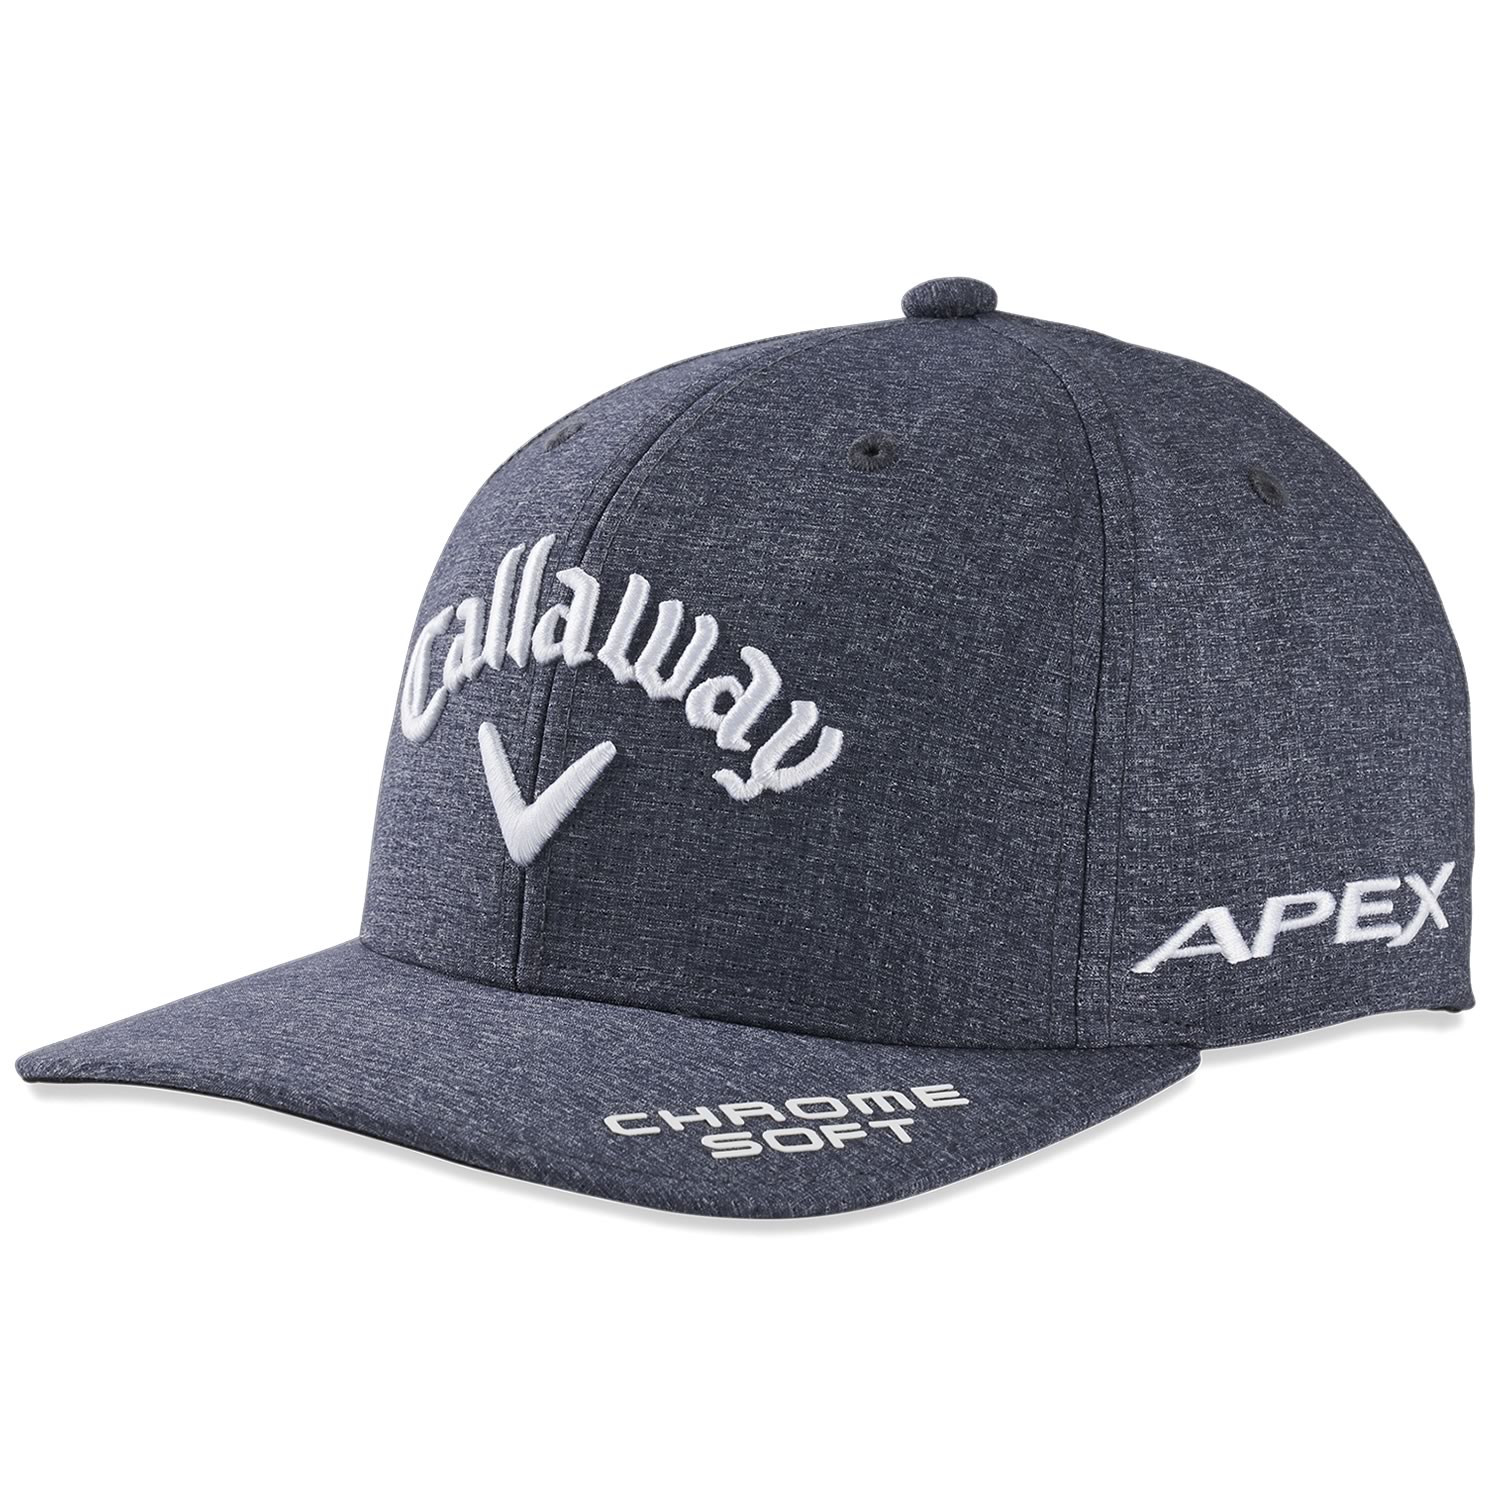 Callaway Tour Authentic Performance Pro Adjustable Baseball Cap